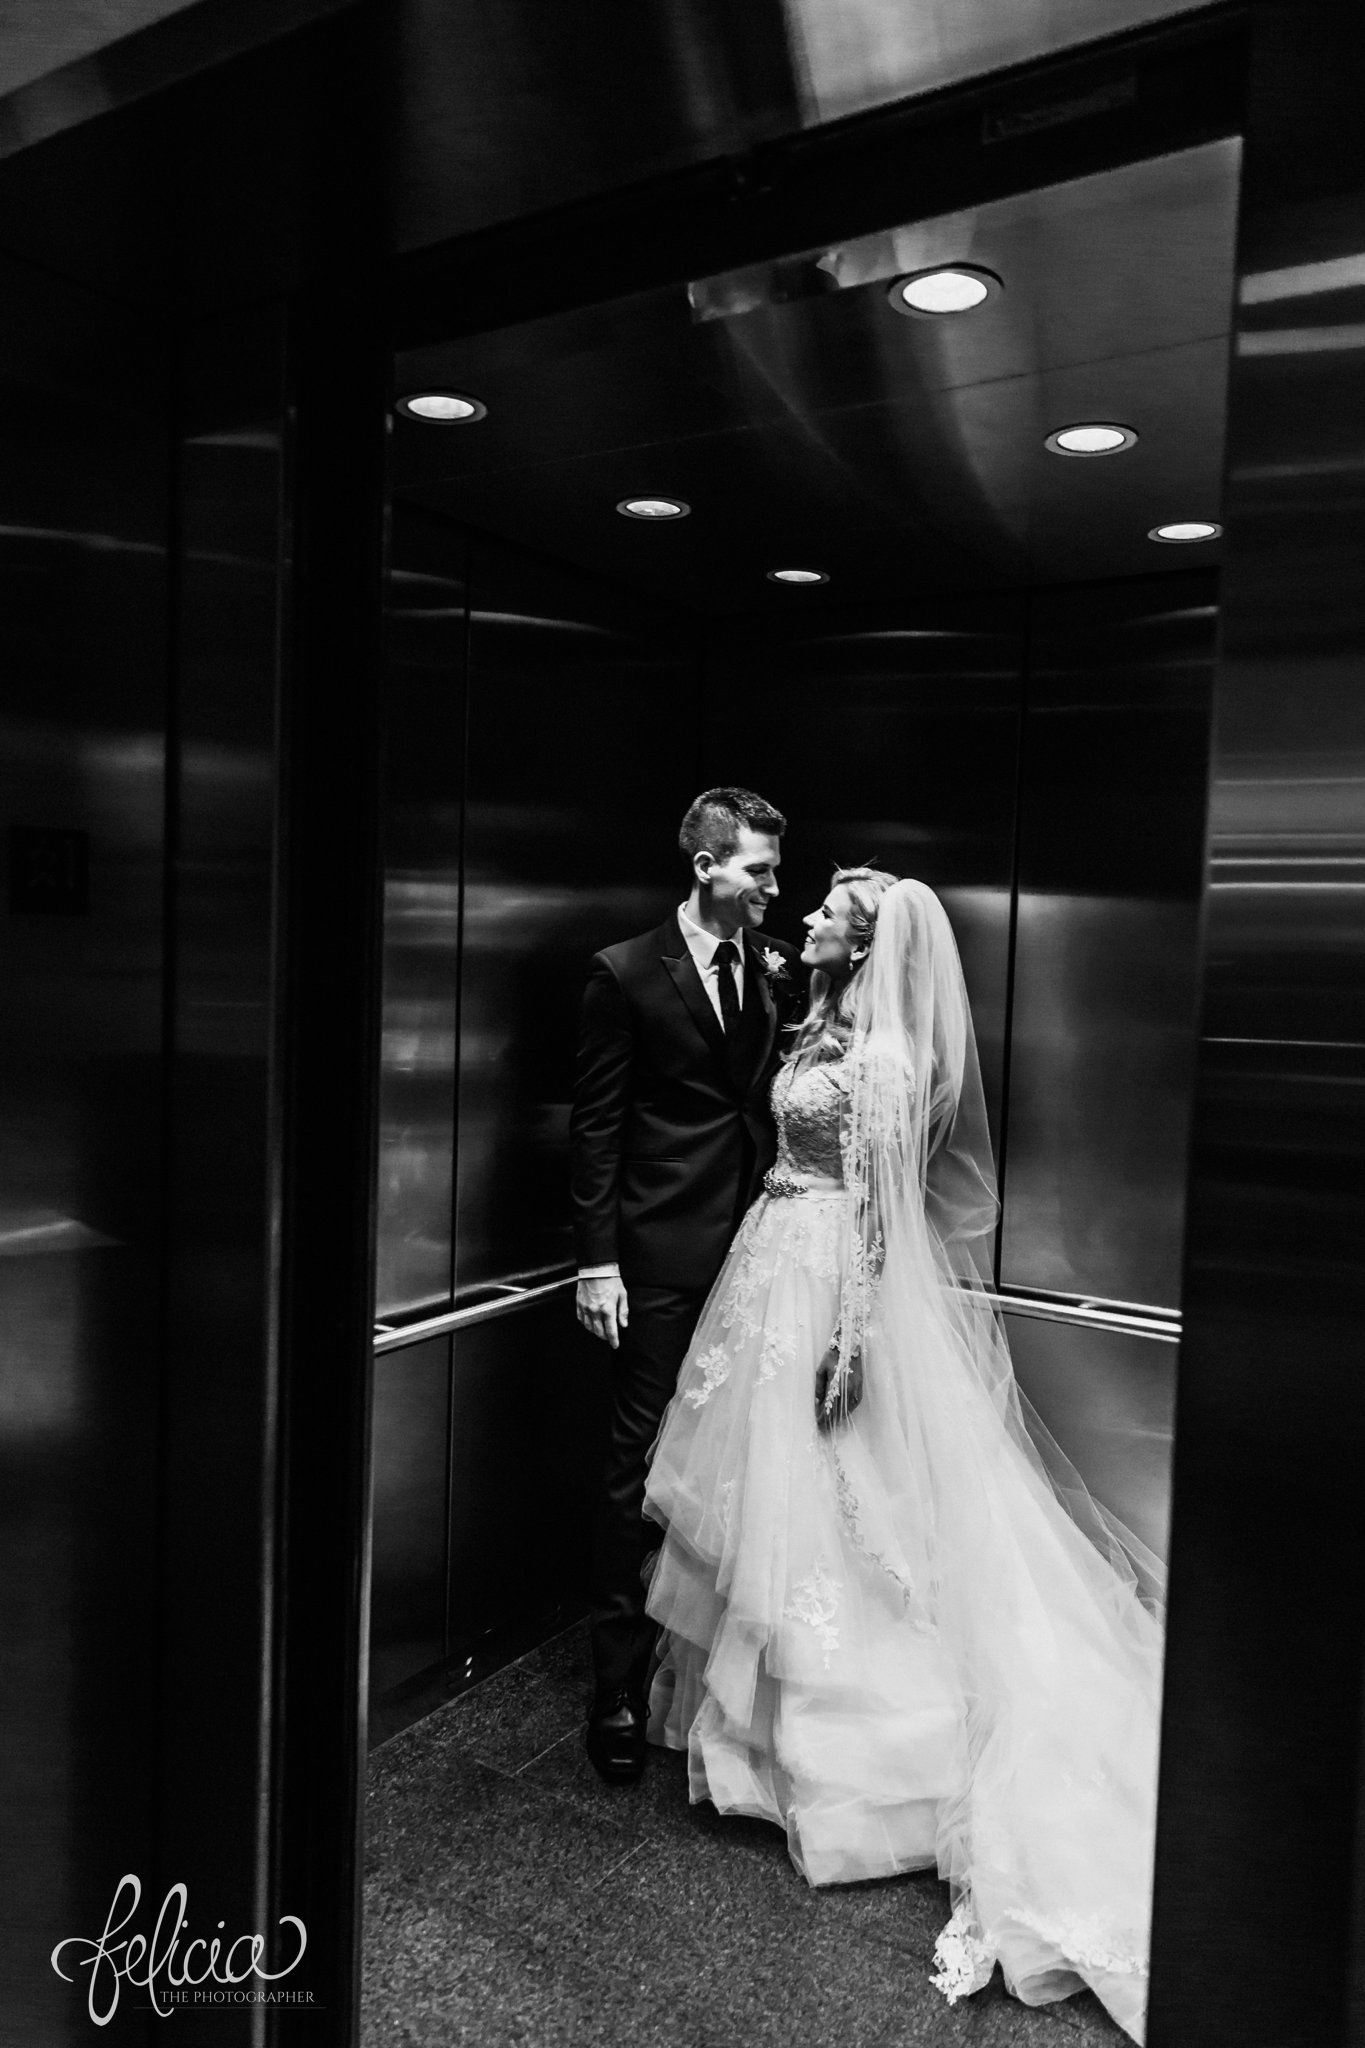 images by feliciathephotographer.com | wedding photographer | kansas city | redemptorist | classic | romantic | whimsical | black and white | tule train | portrait | lace long sleeve dress | true love | 